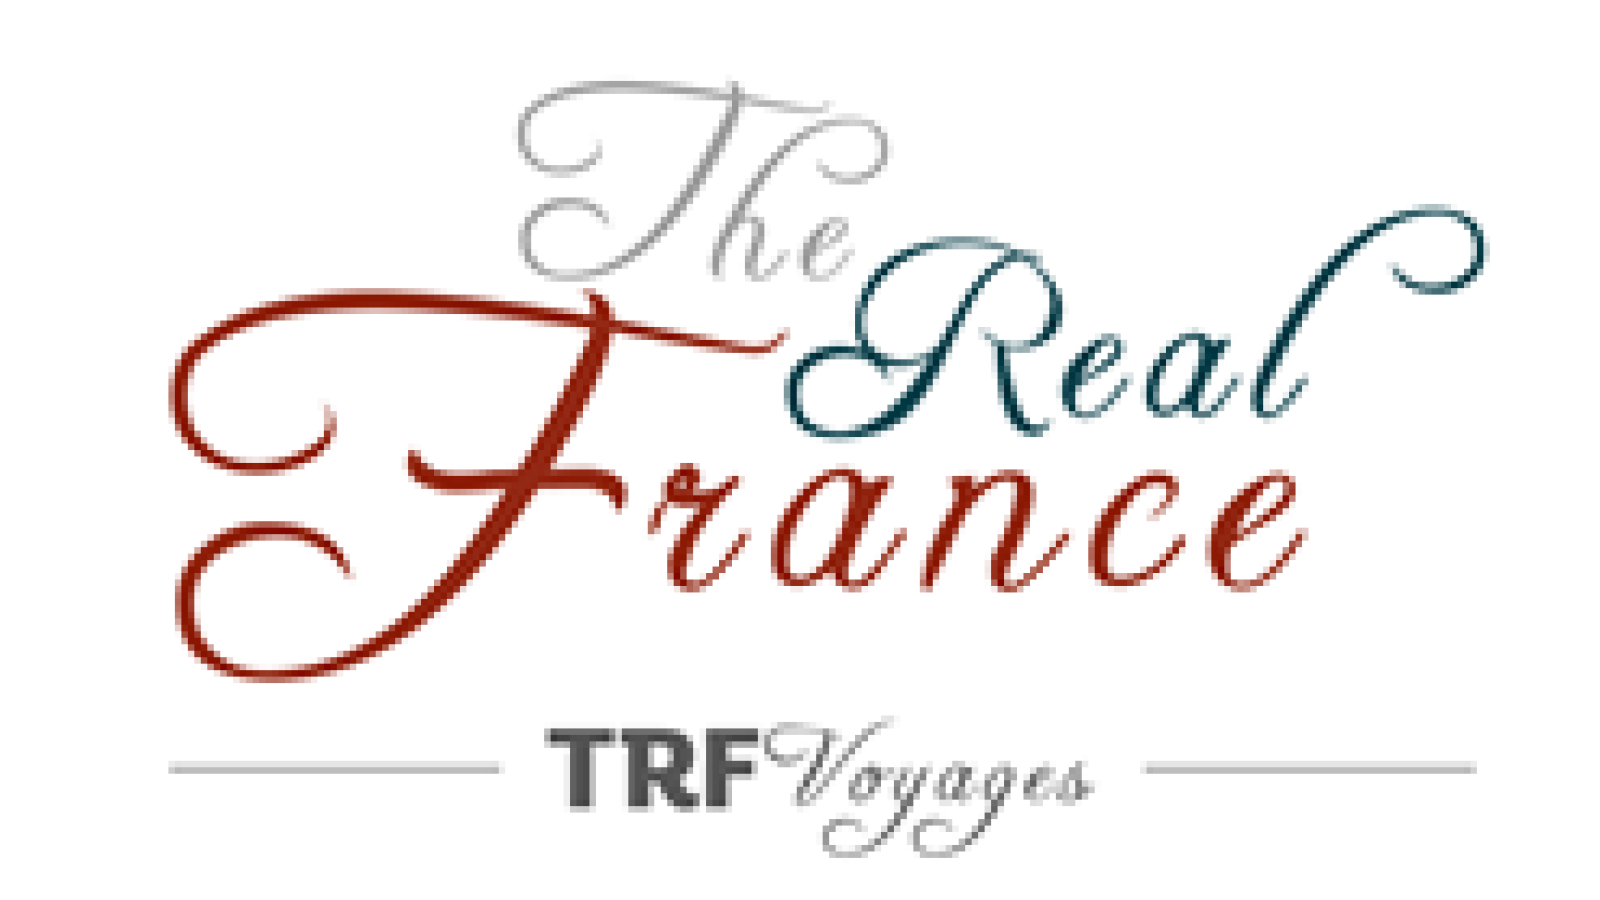 Logo Real France